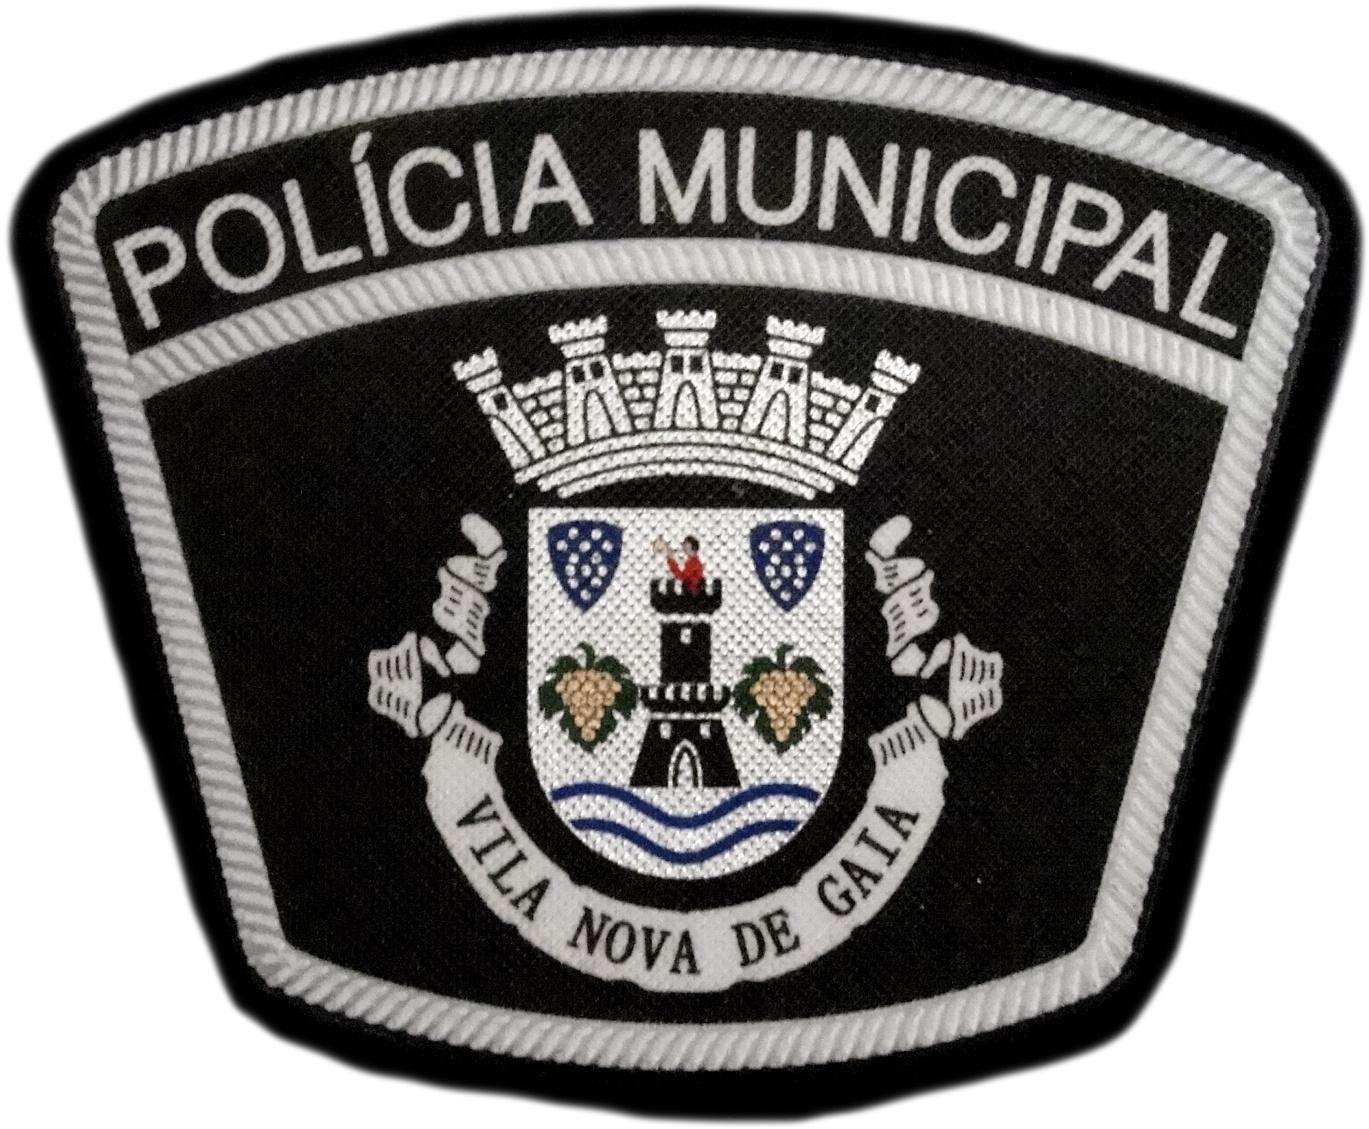 Policía Municipal Ciudad de Vila Nova de Gaia Portugal parche insignia emblema distintivo Police Dept